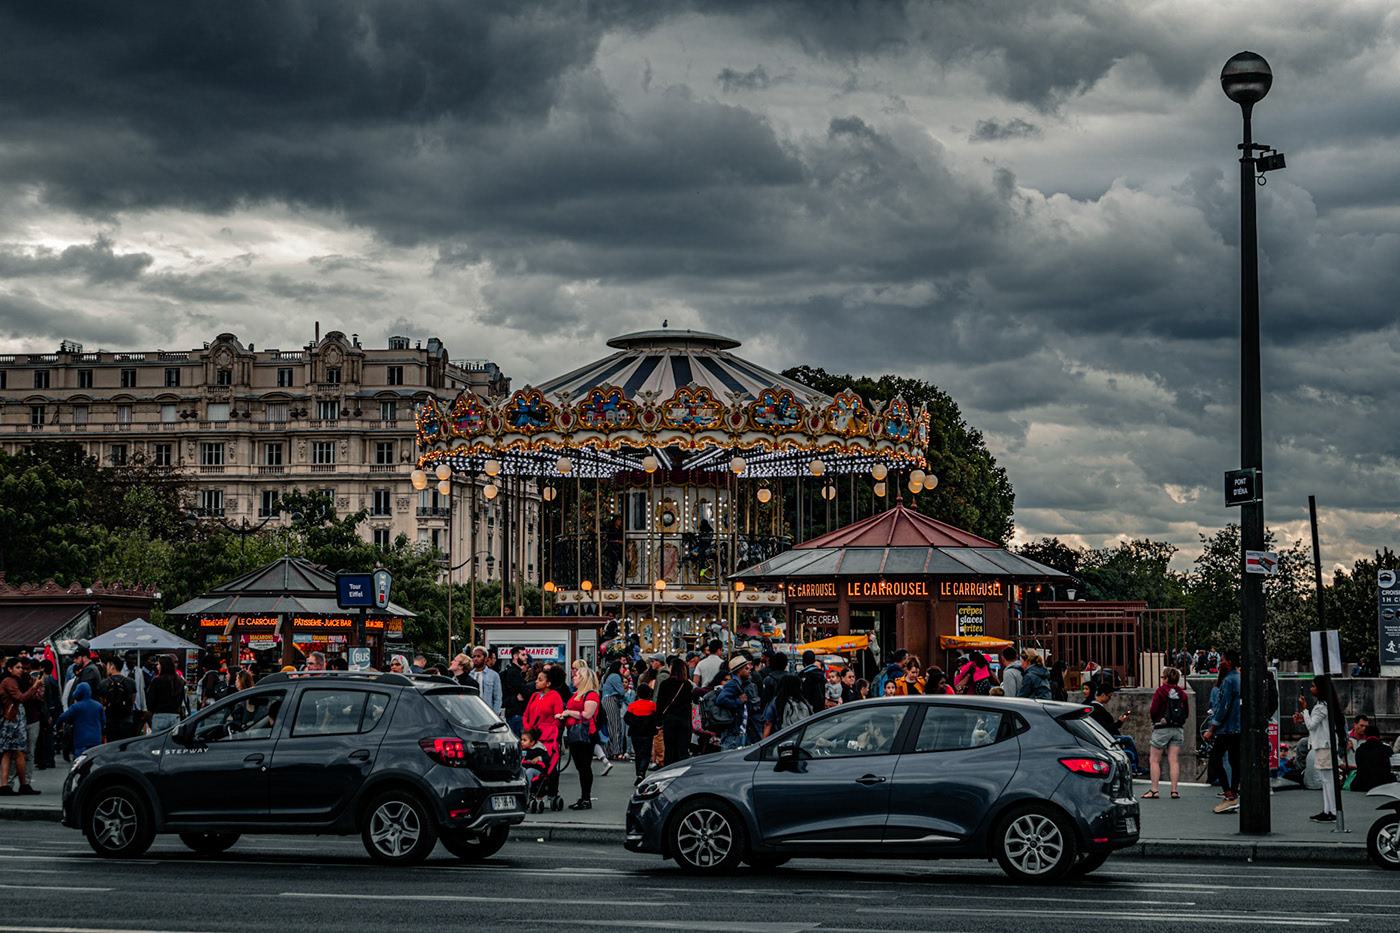 París: Street photography